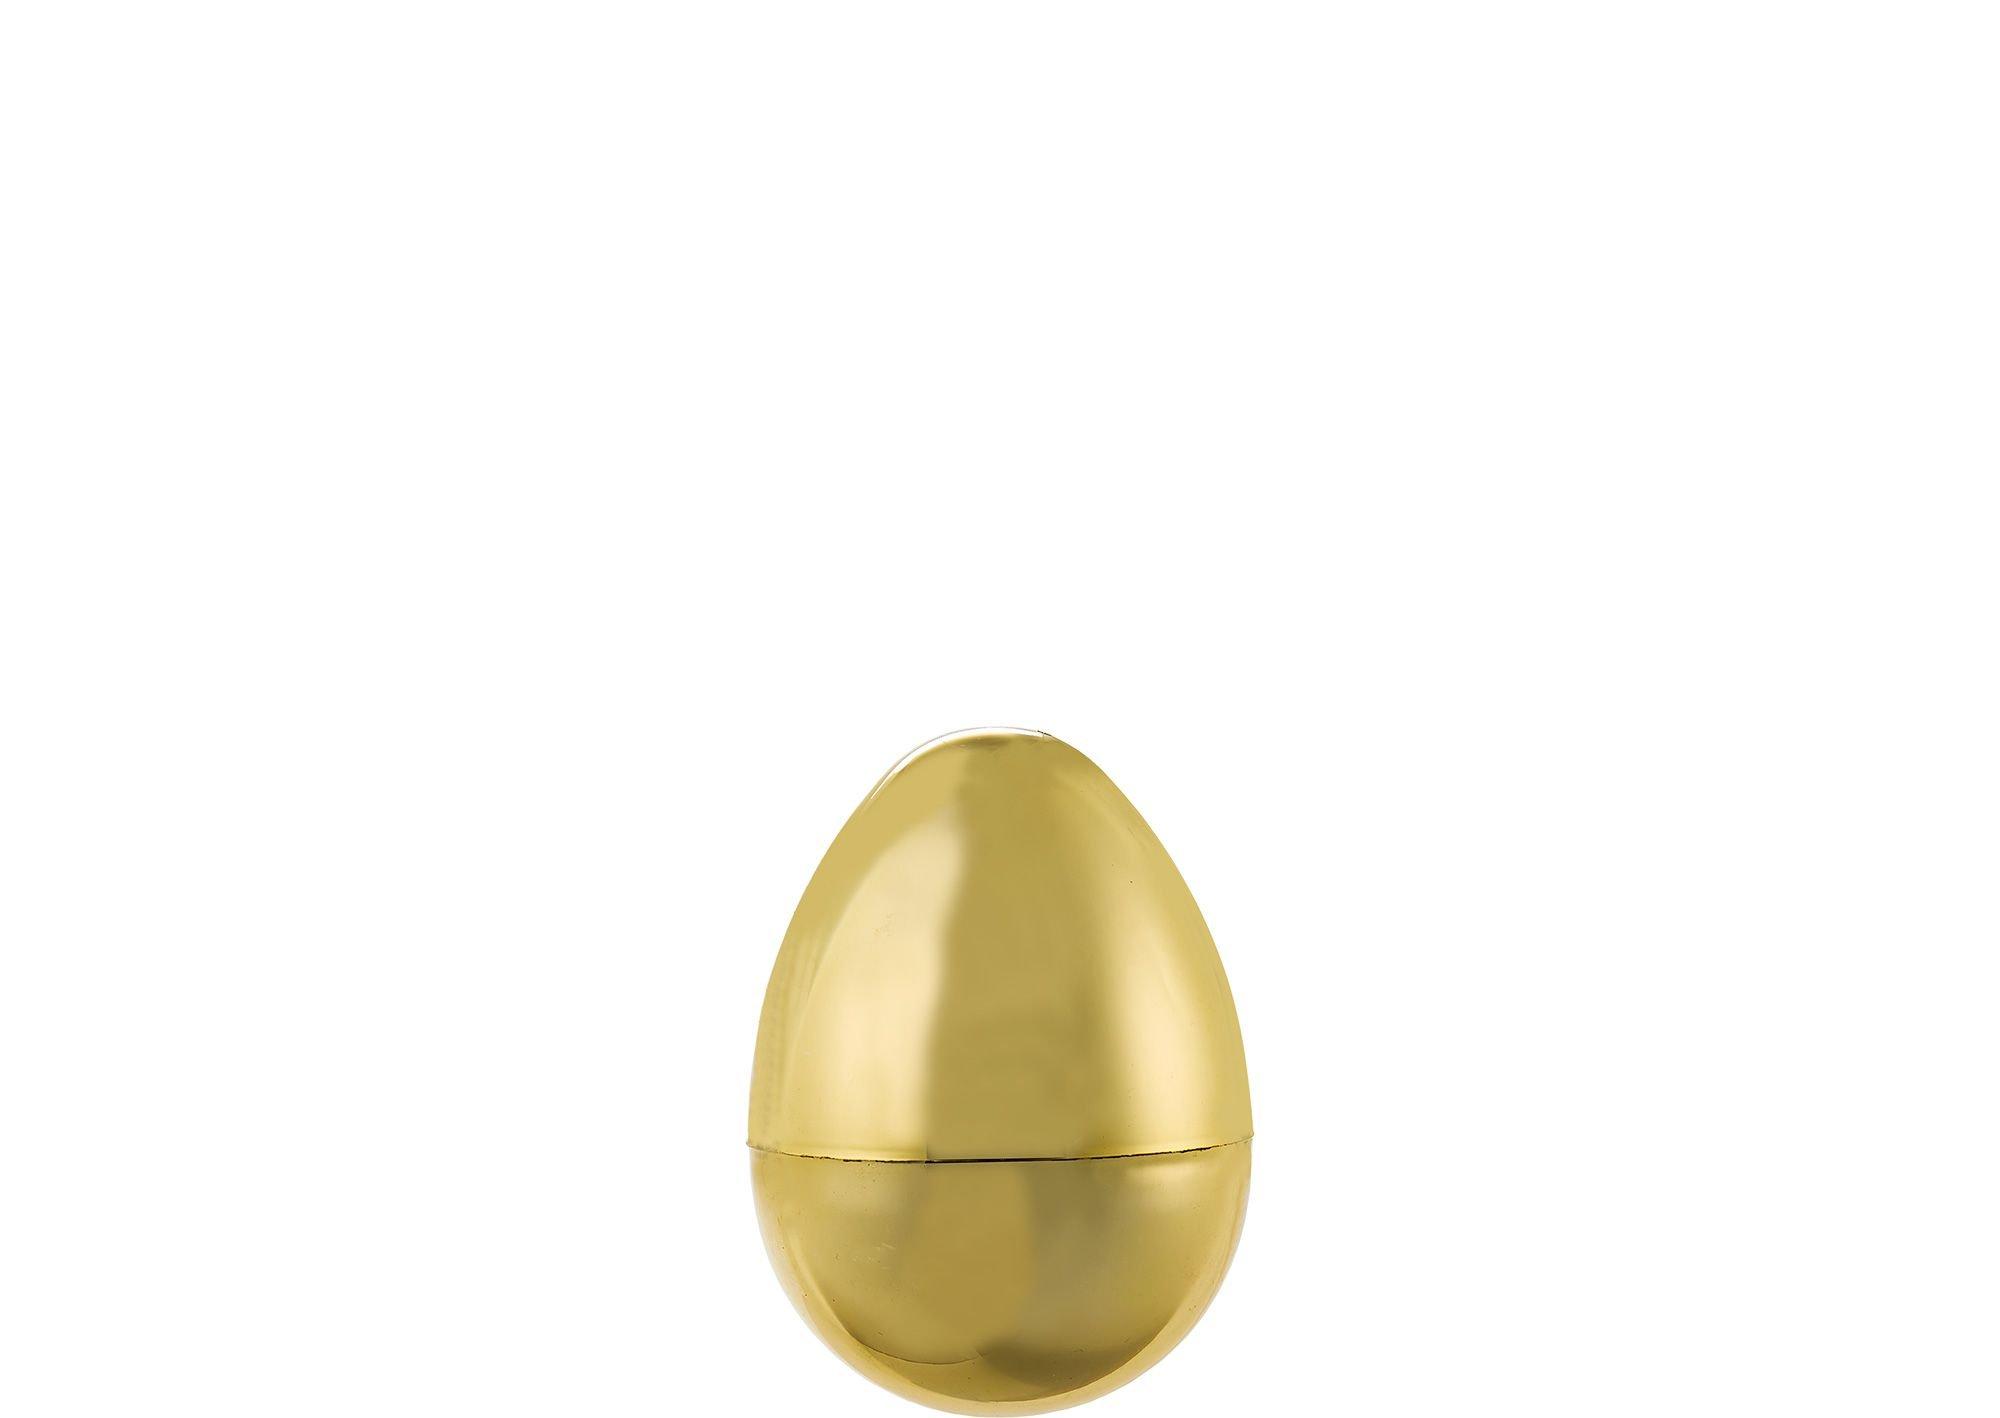 144 PCS 3.15" Plastic Easter Eggs + 6 Golden Eggs Empty